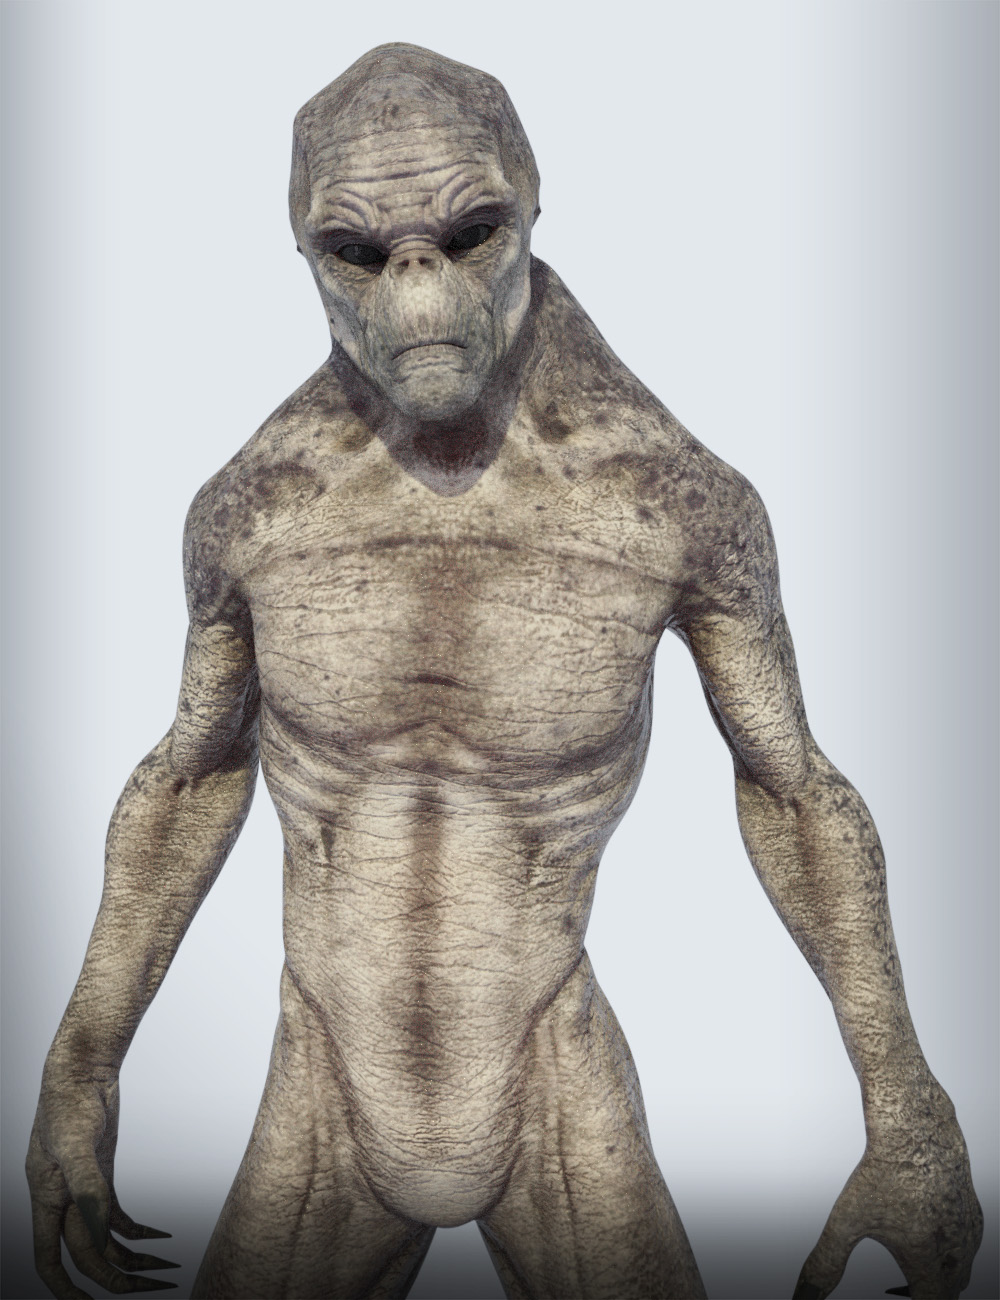 Invasion Textures for Alien-X by: Josh Crockett, 3D Models by Daz 3D